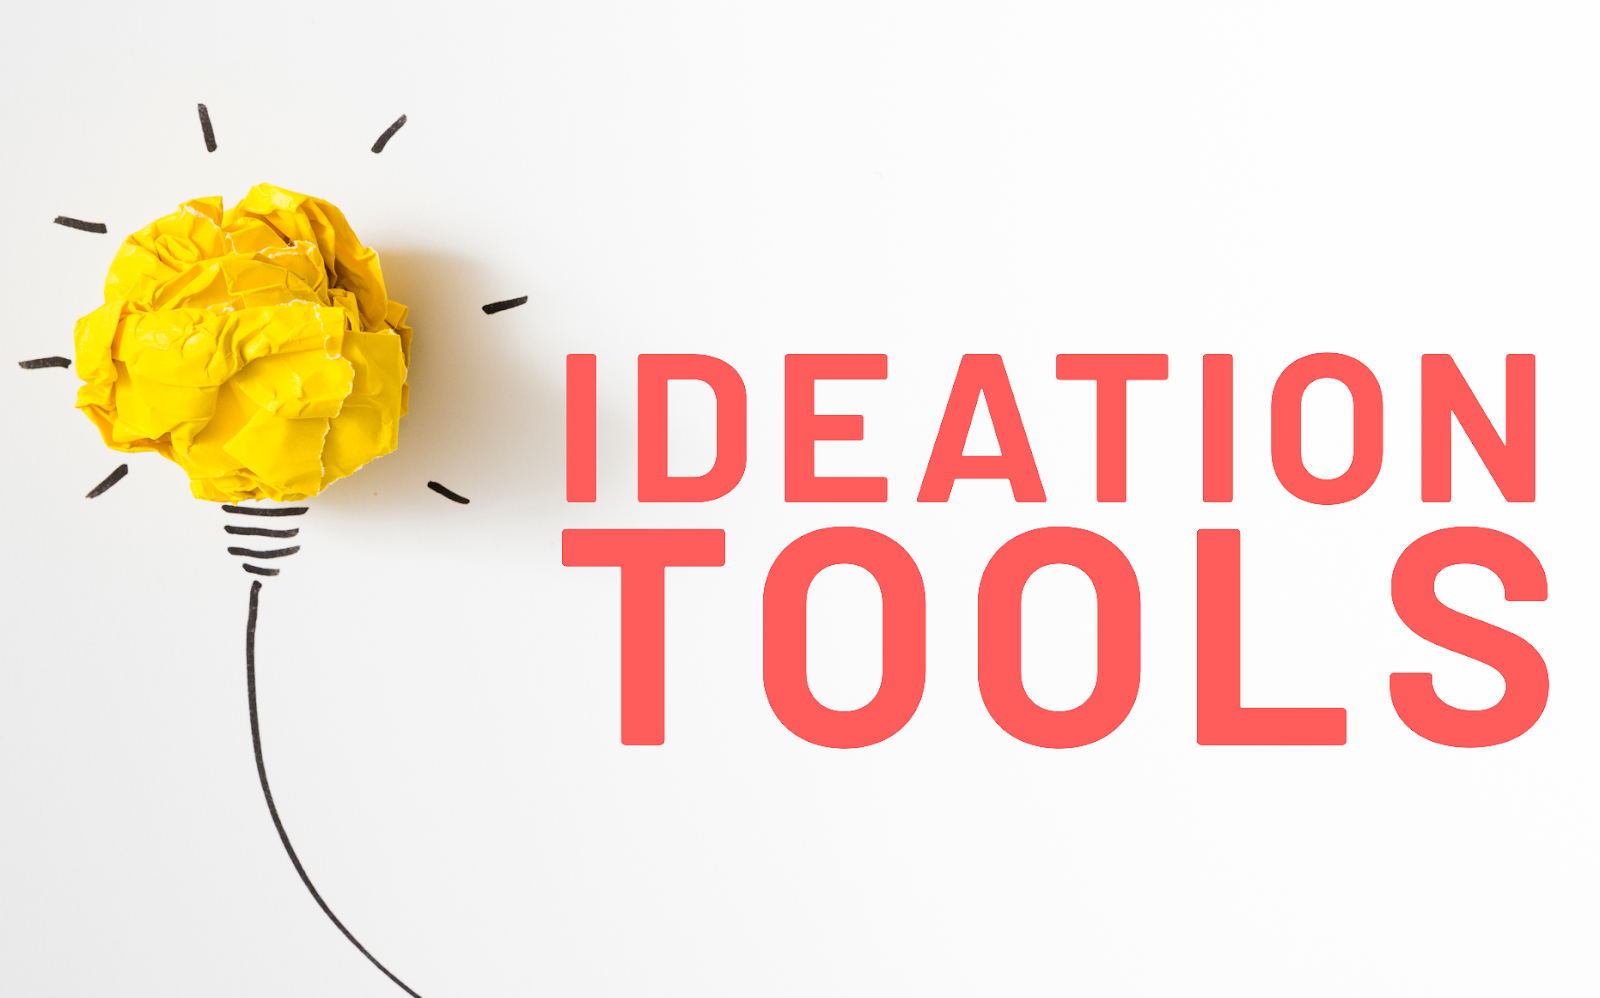 tools for brainstorming, brainstorming tools online, brainstorming tools, ideation software tools, ideation tools